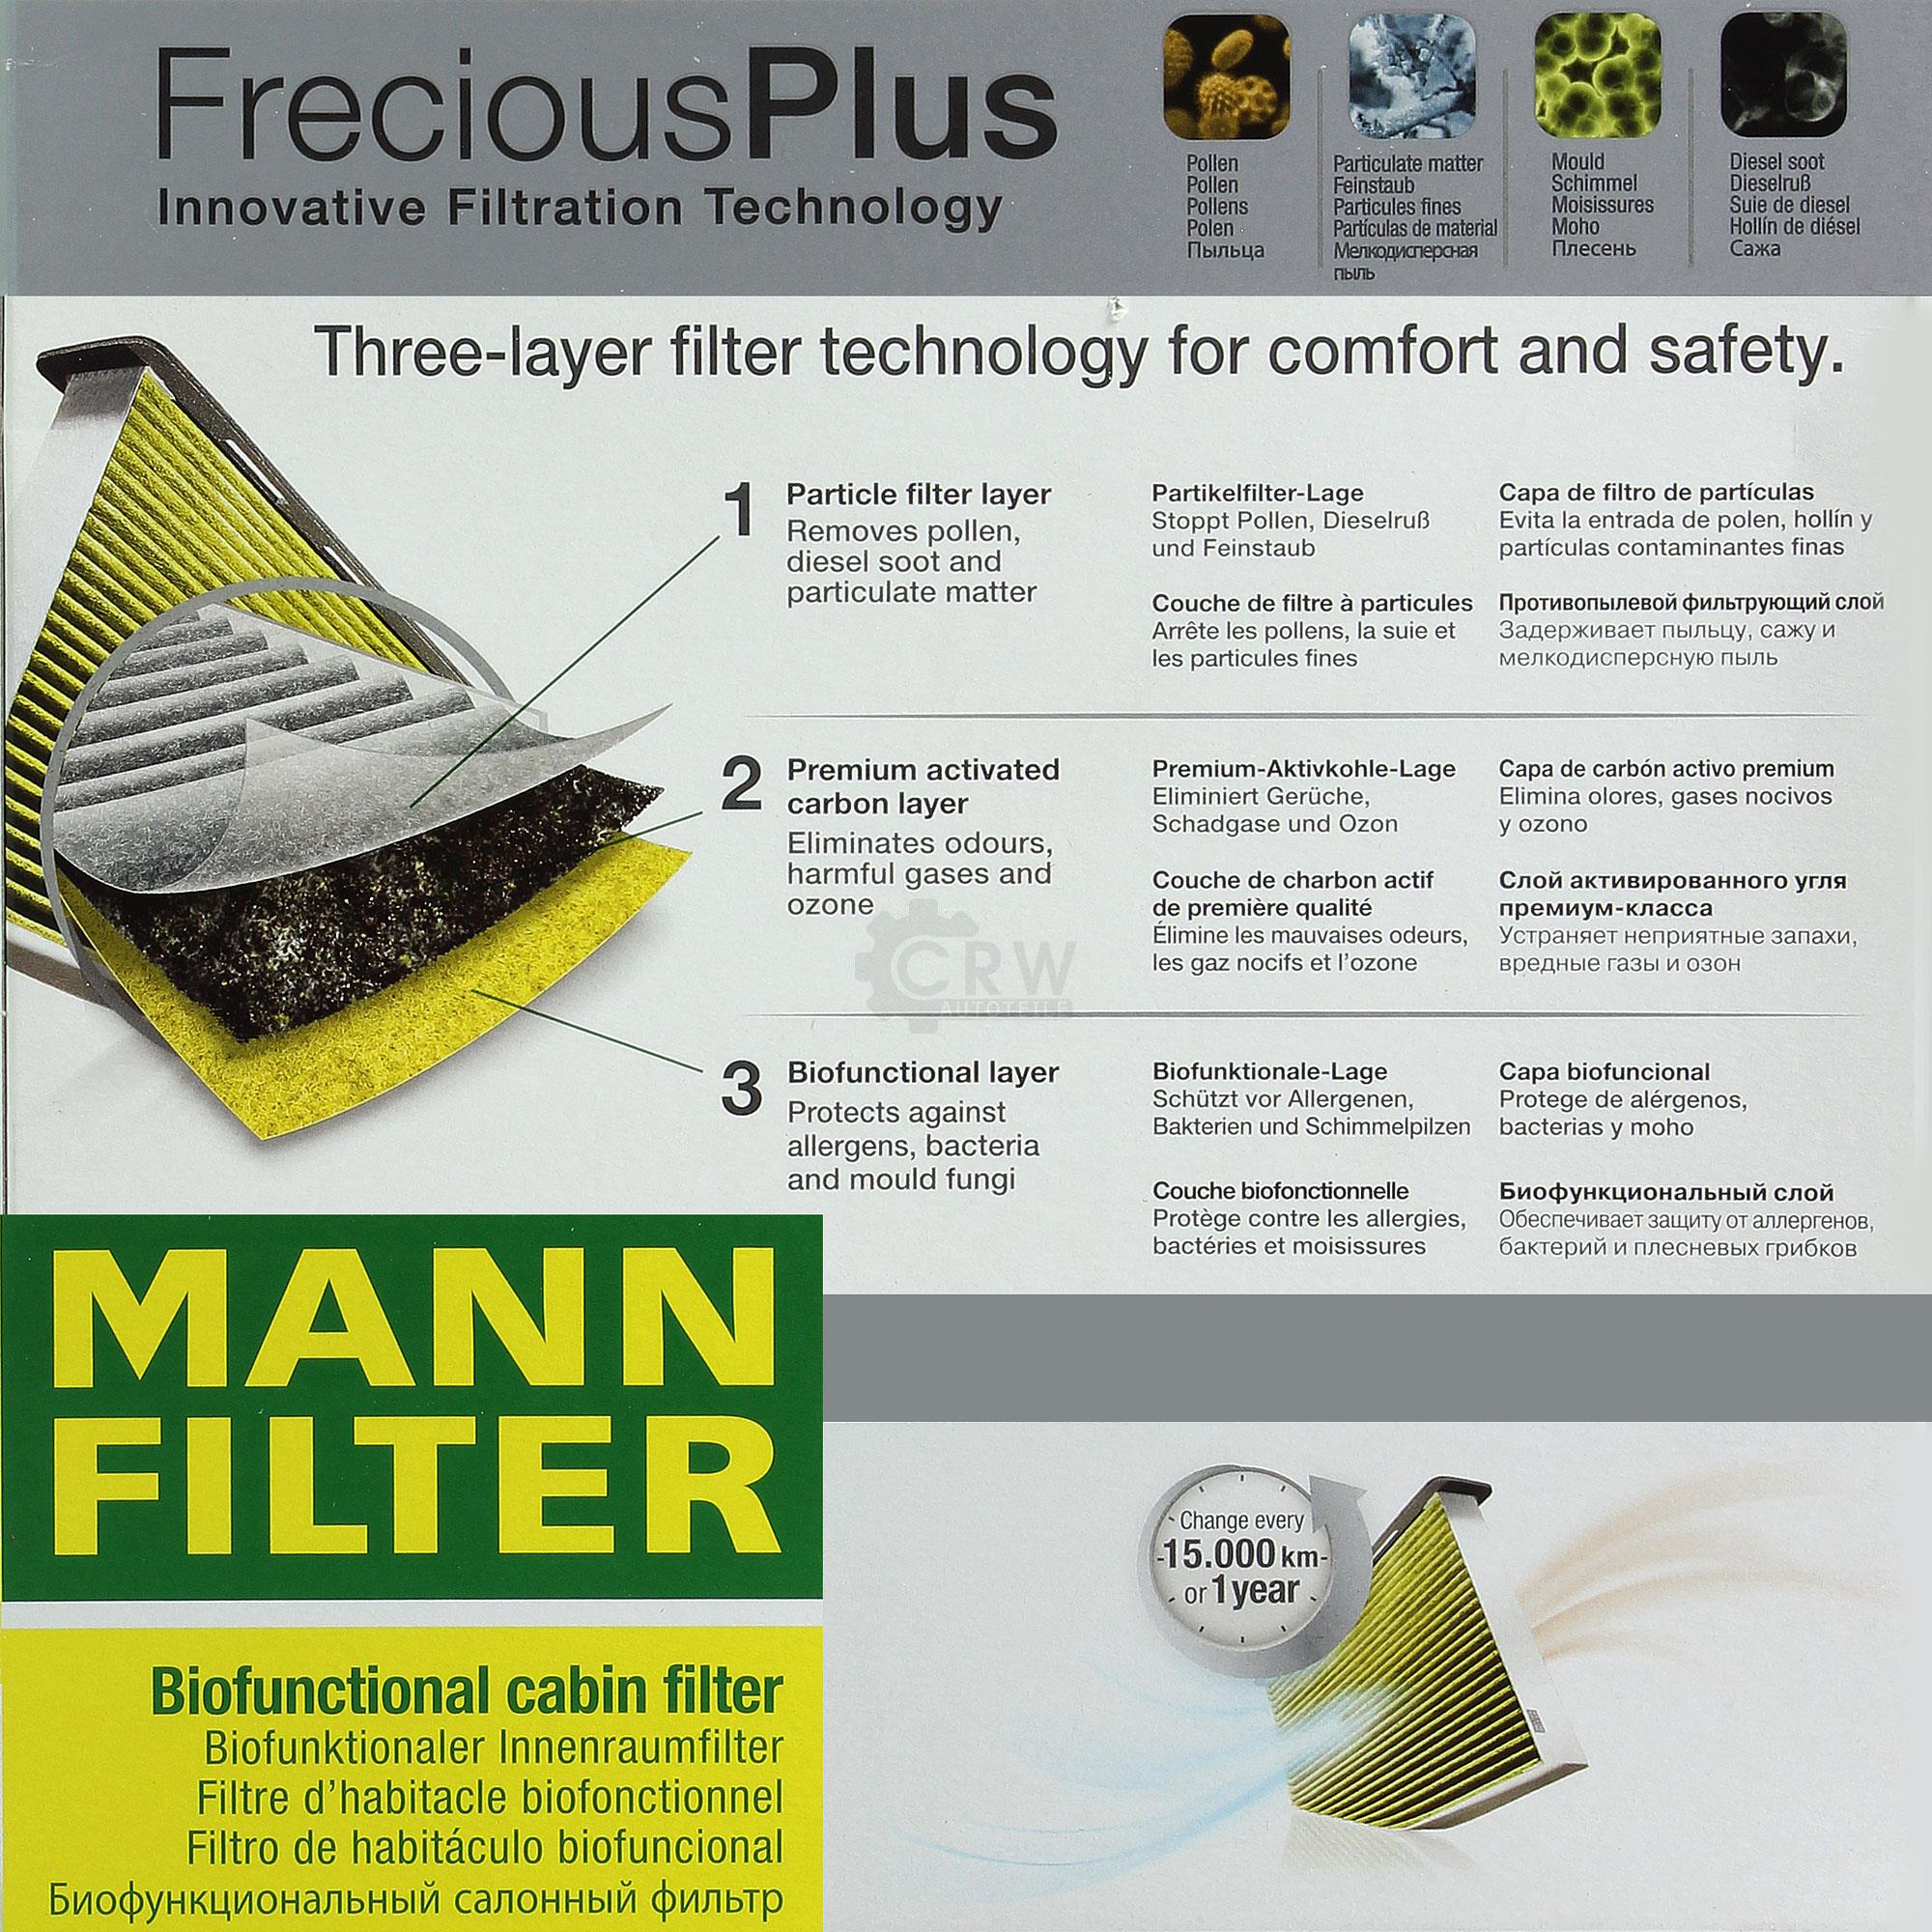 MANN-Filter Innenraumfilter Biofunctional für Allergiker FP 2544